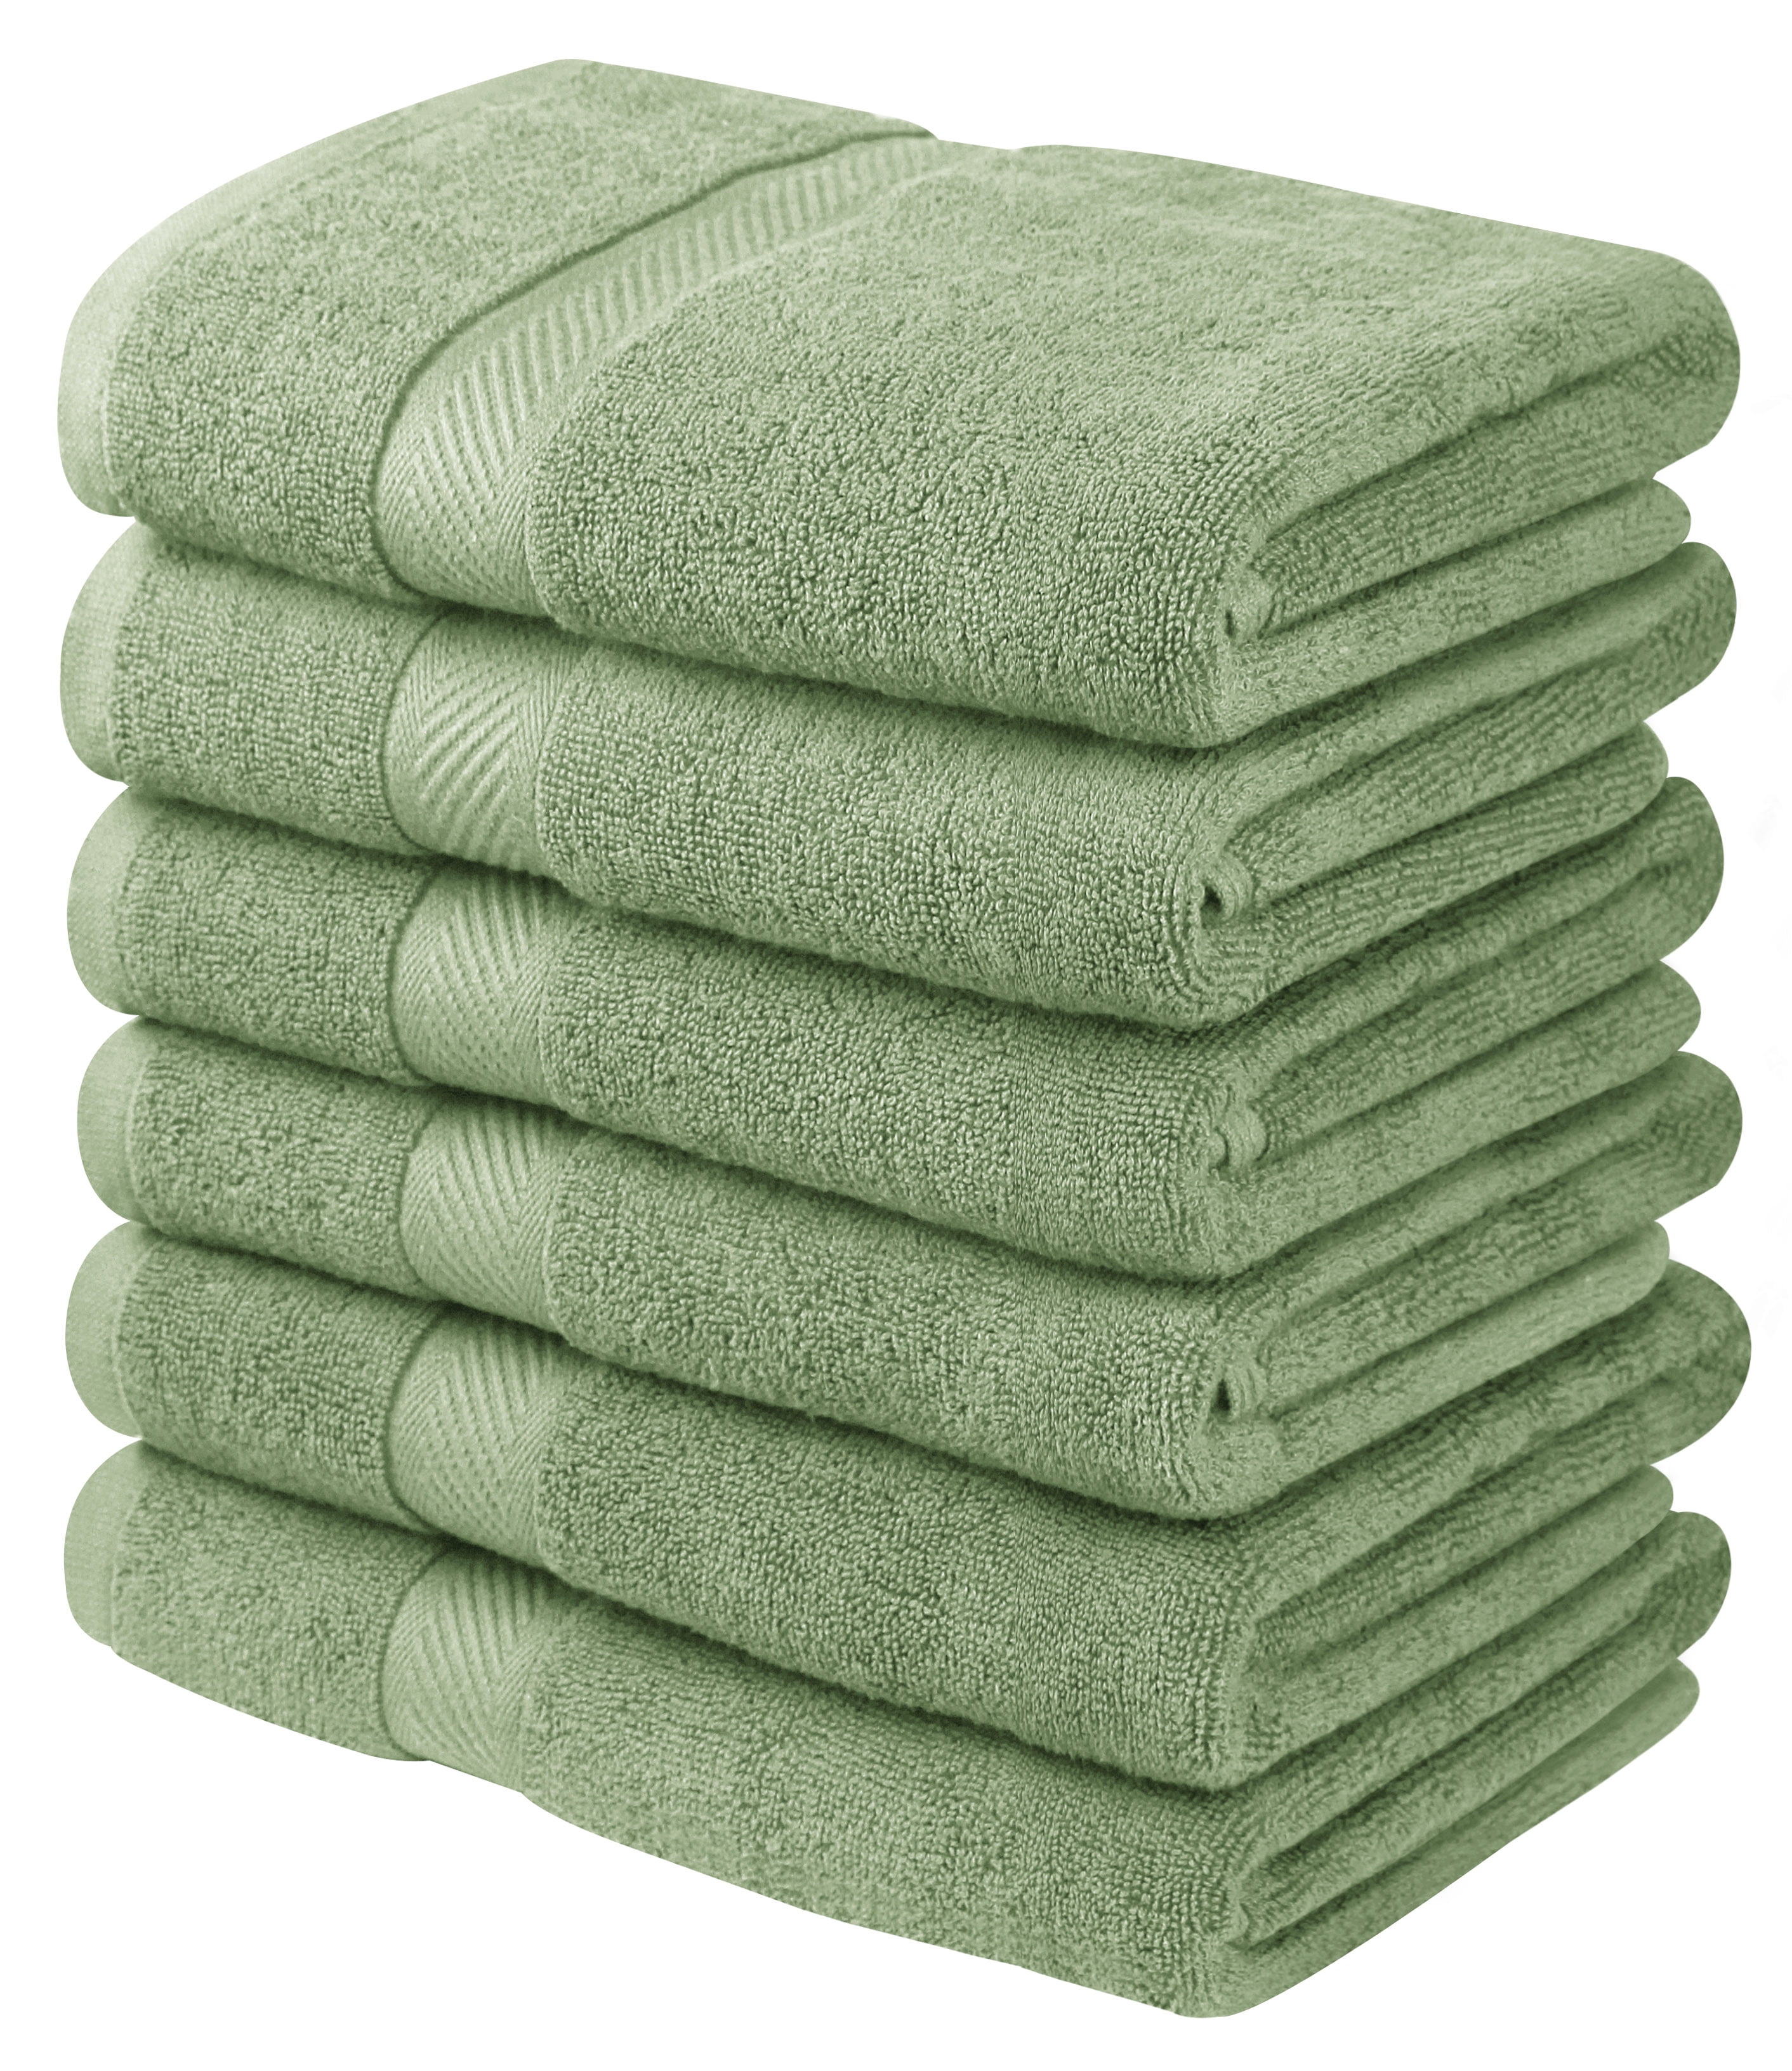 24 new 100% cotton linens bath towels commercial grade gym hotel motel 24x48 